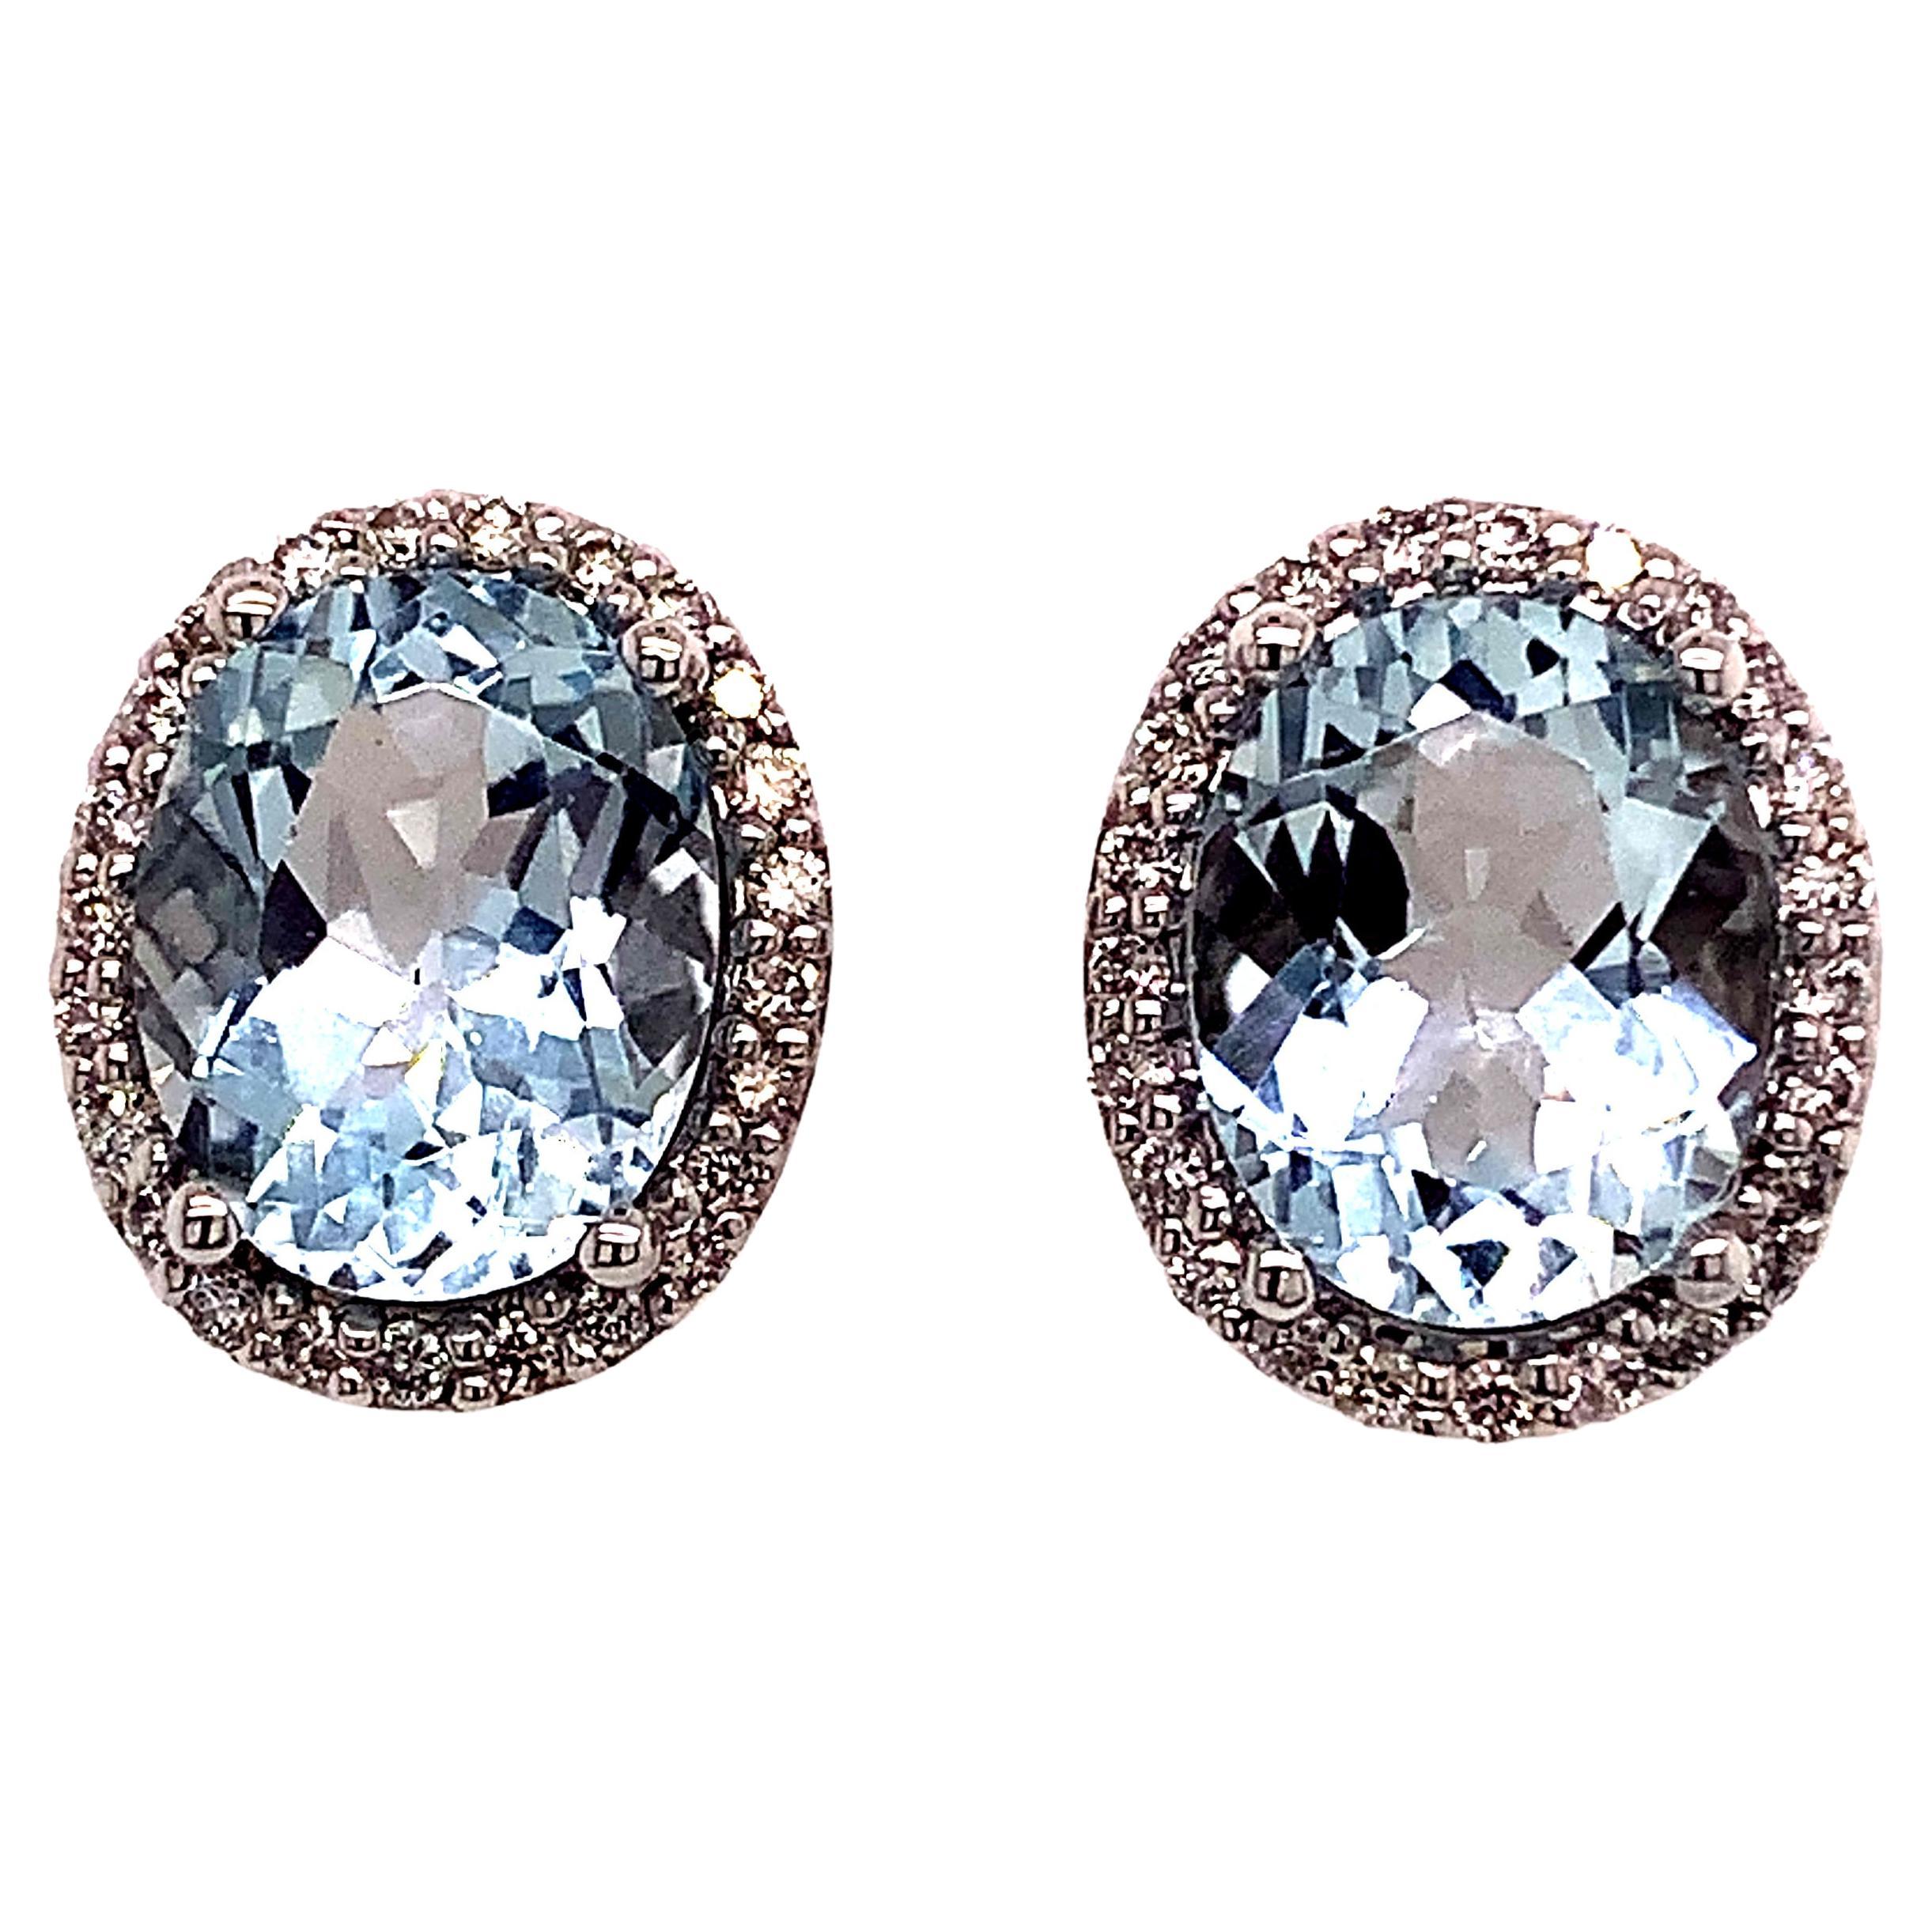 Natural Aquamarine Diamond Stud Earrings 14k WG 5.46 TCW Certified For Sale